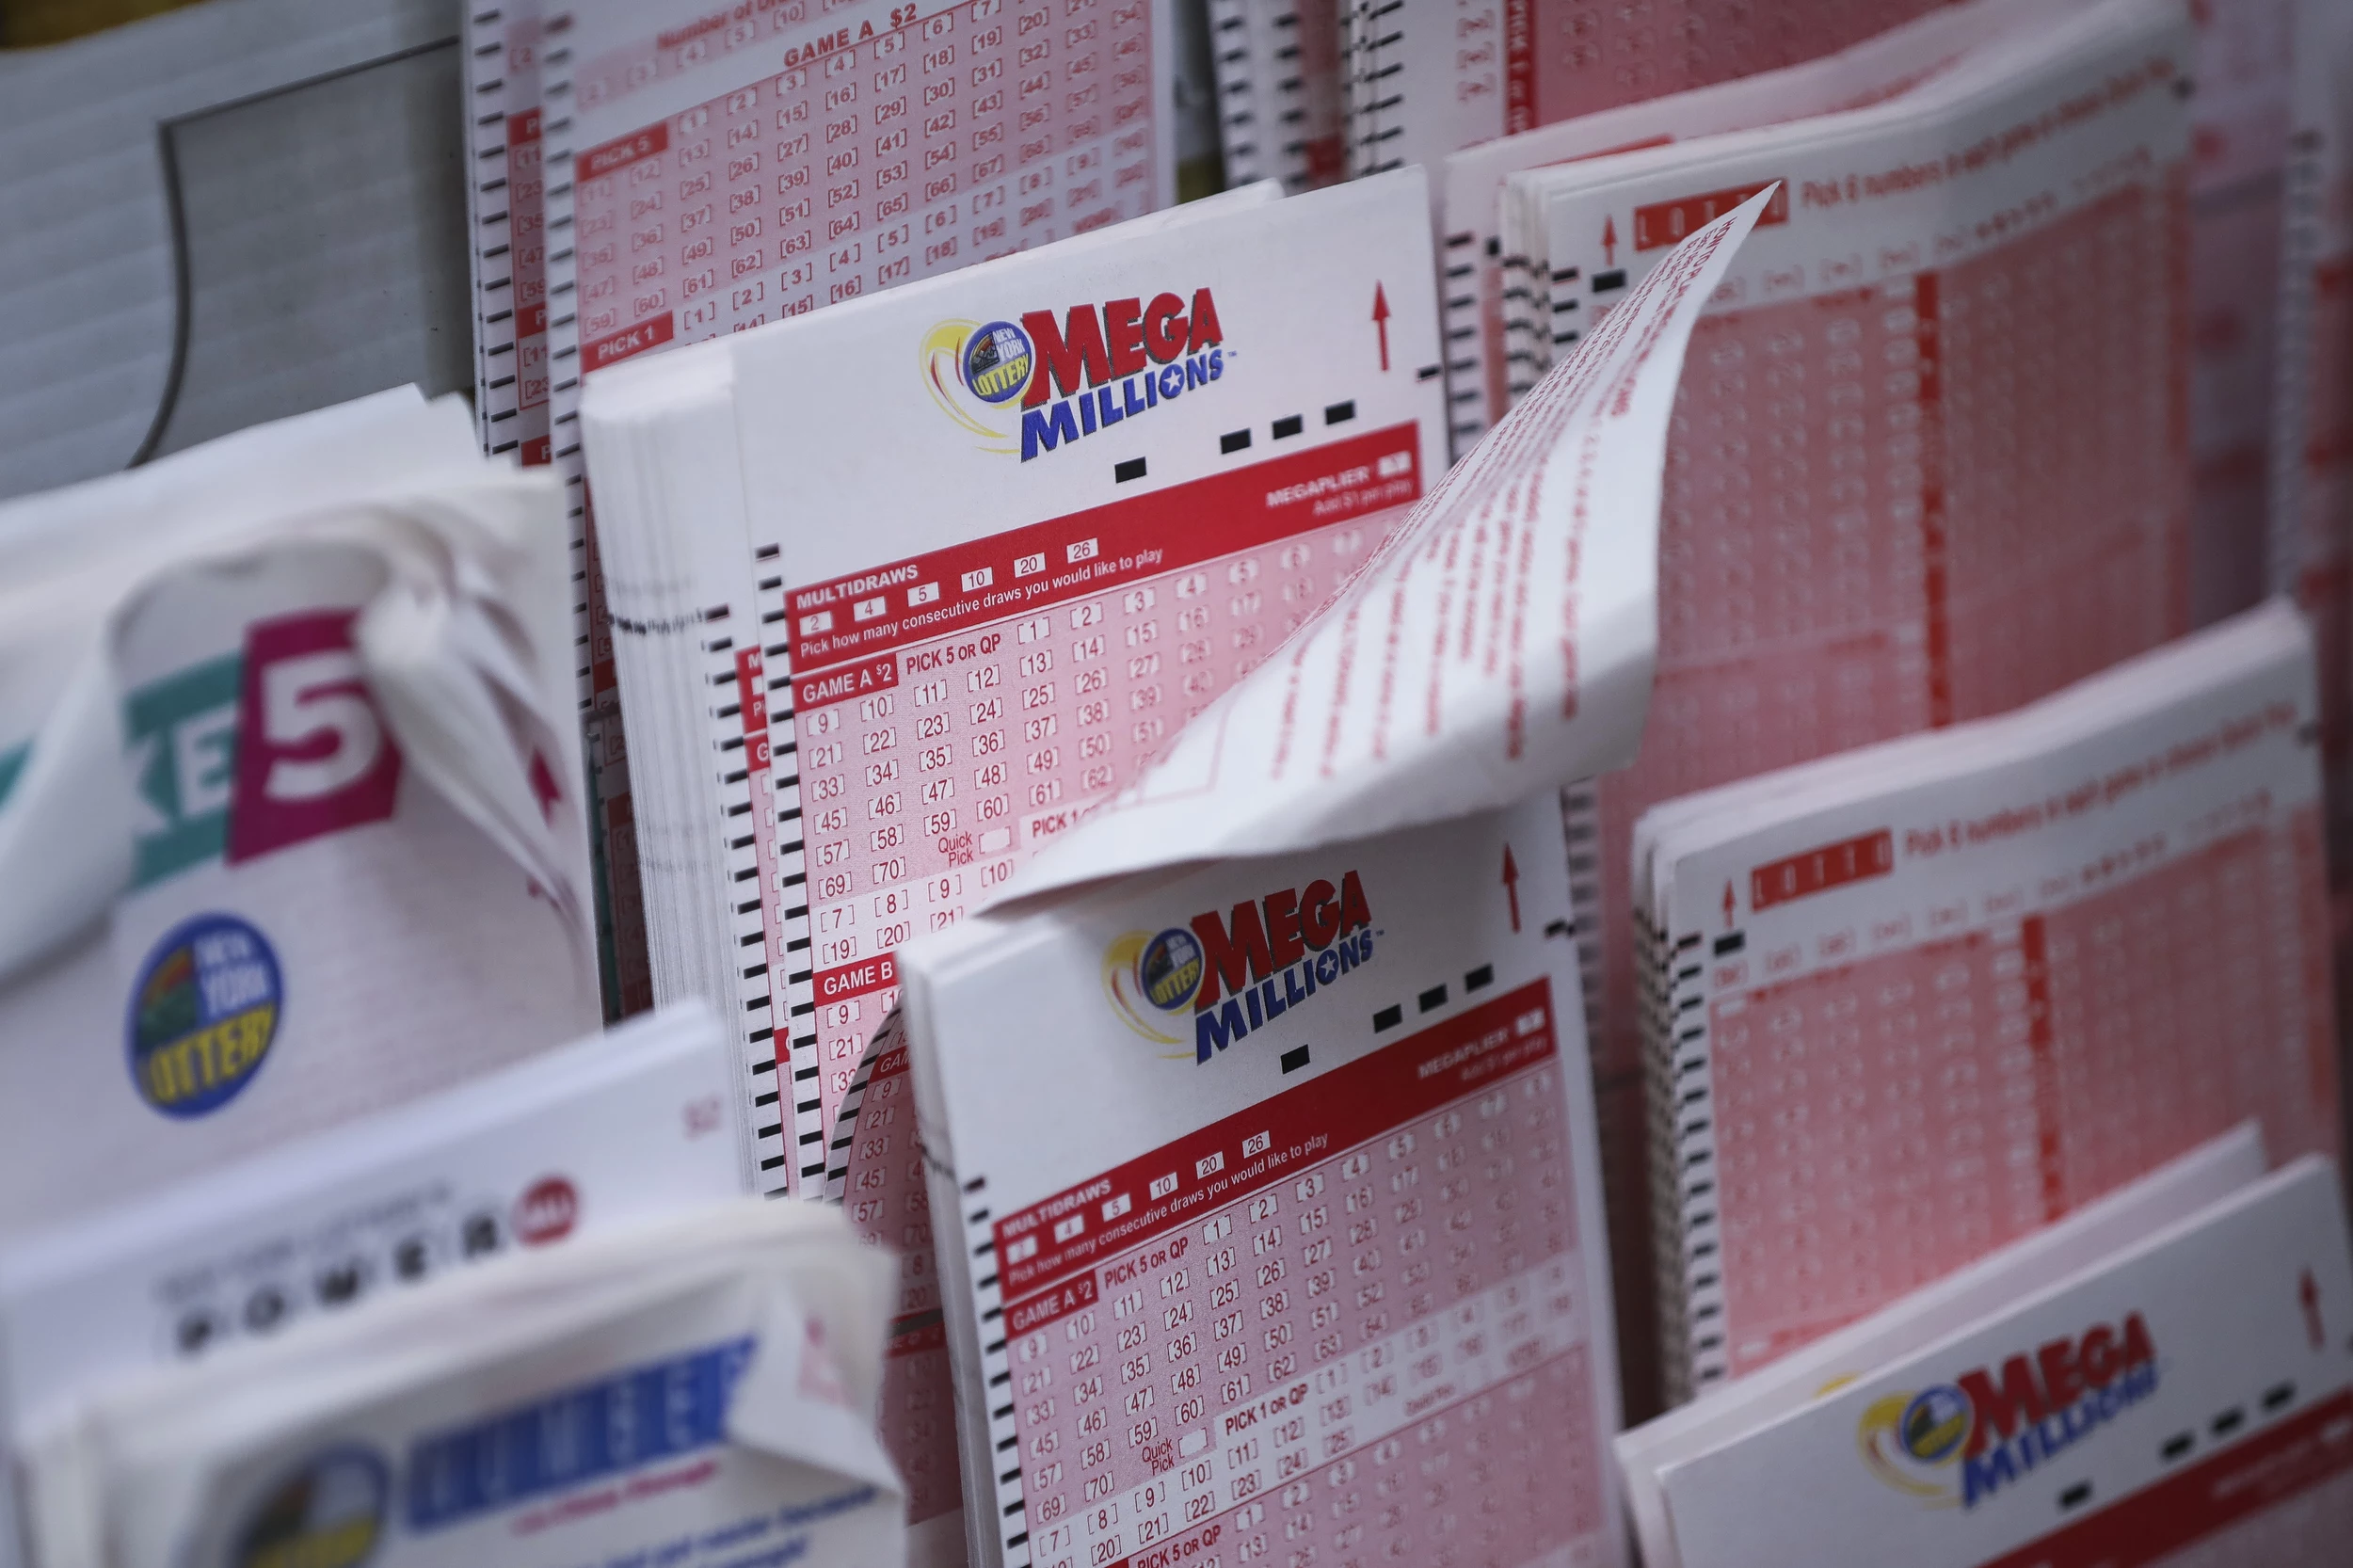 Mega Millions Jackpot Becomes Largest Prize In U.S. History at $1.6 Billion